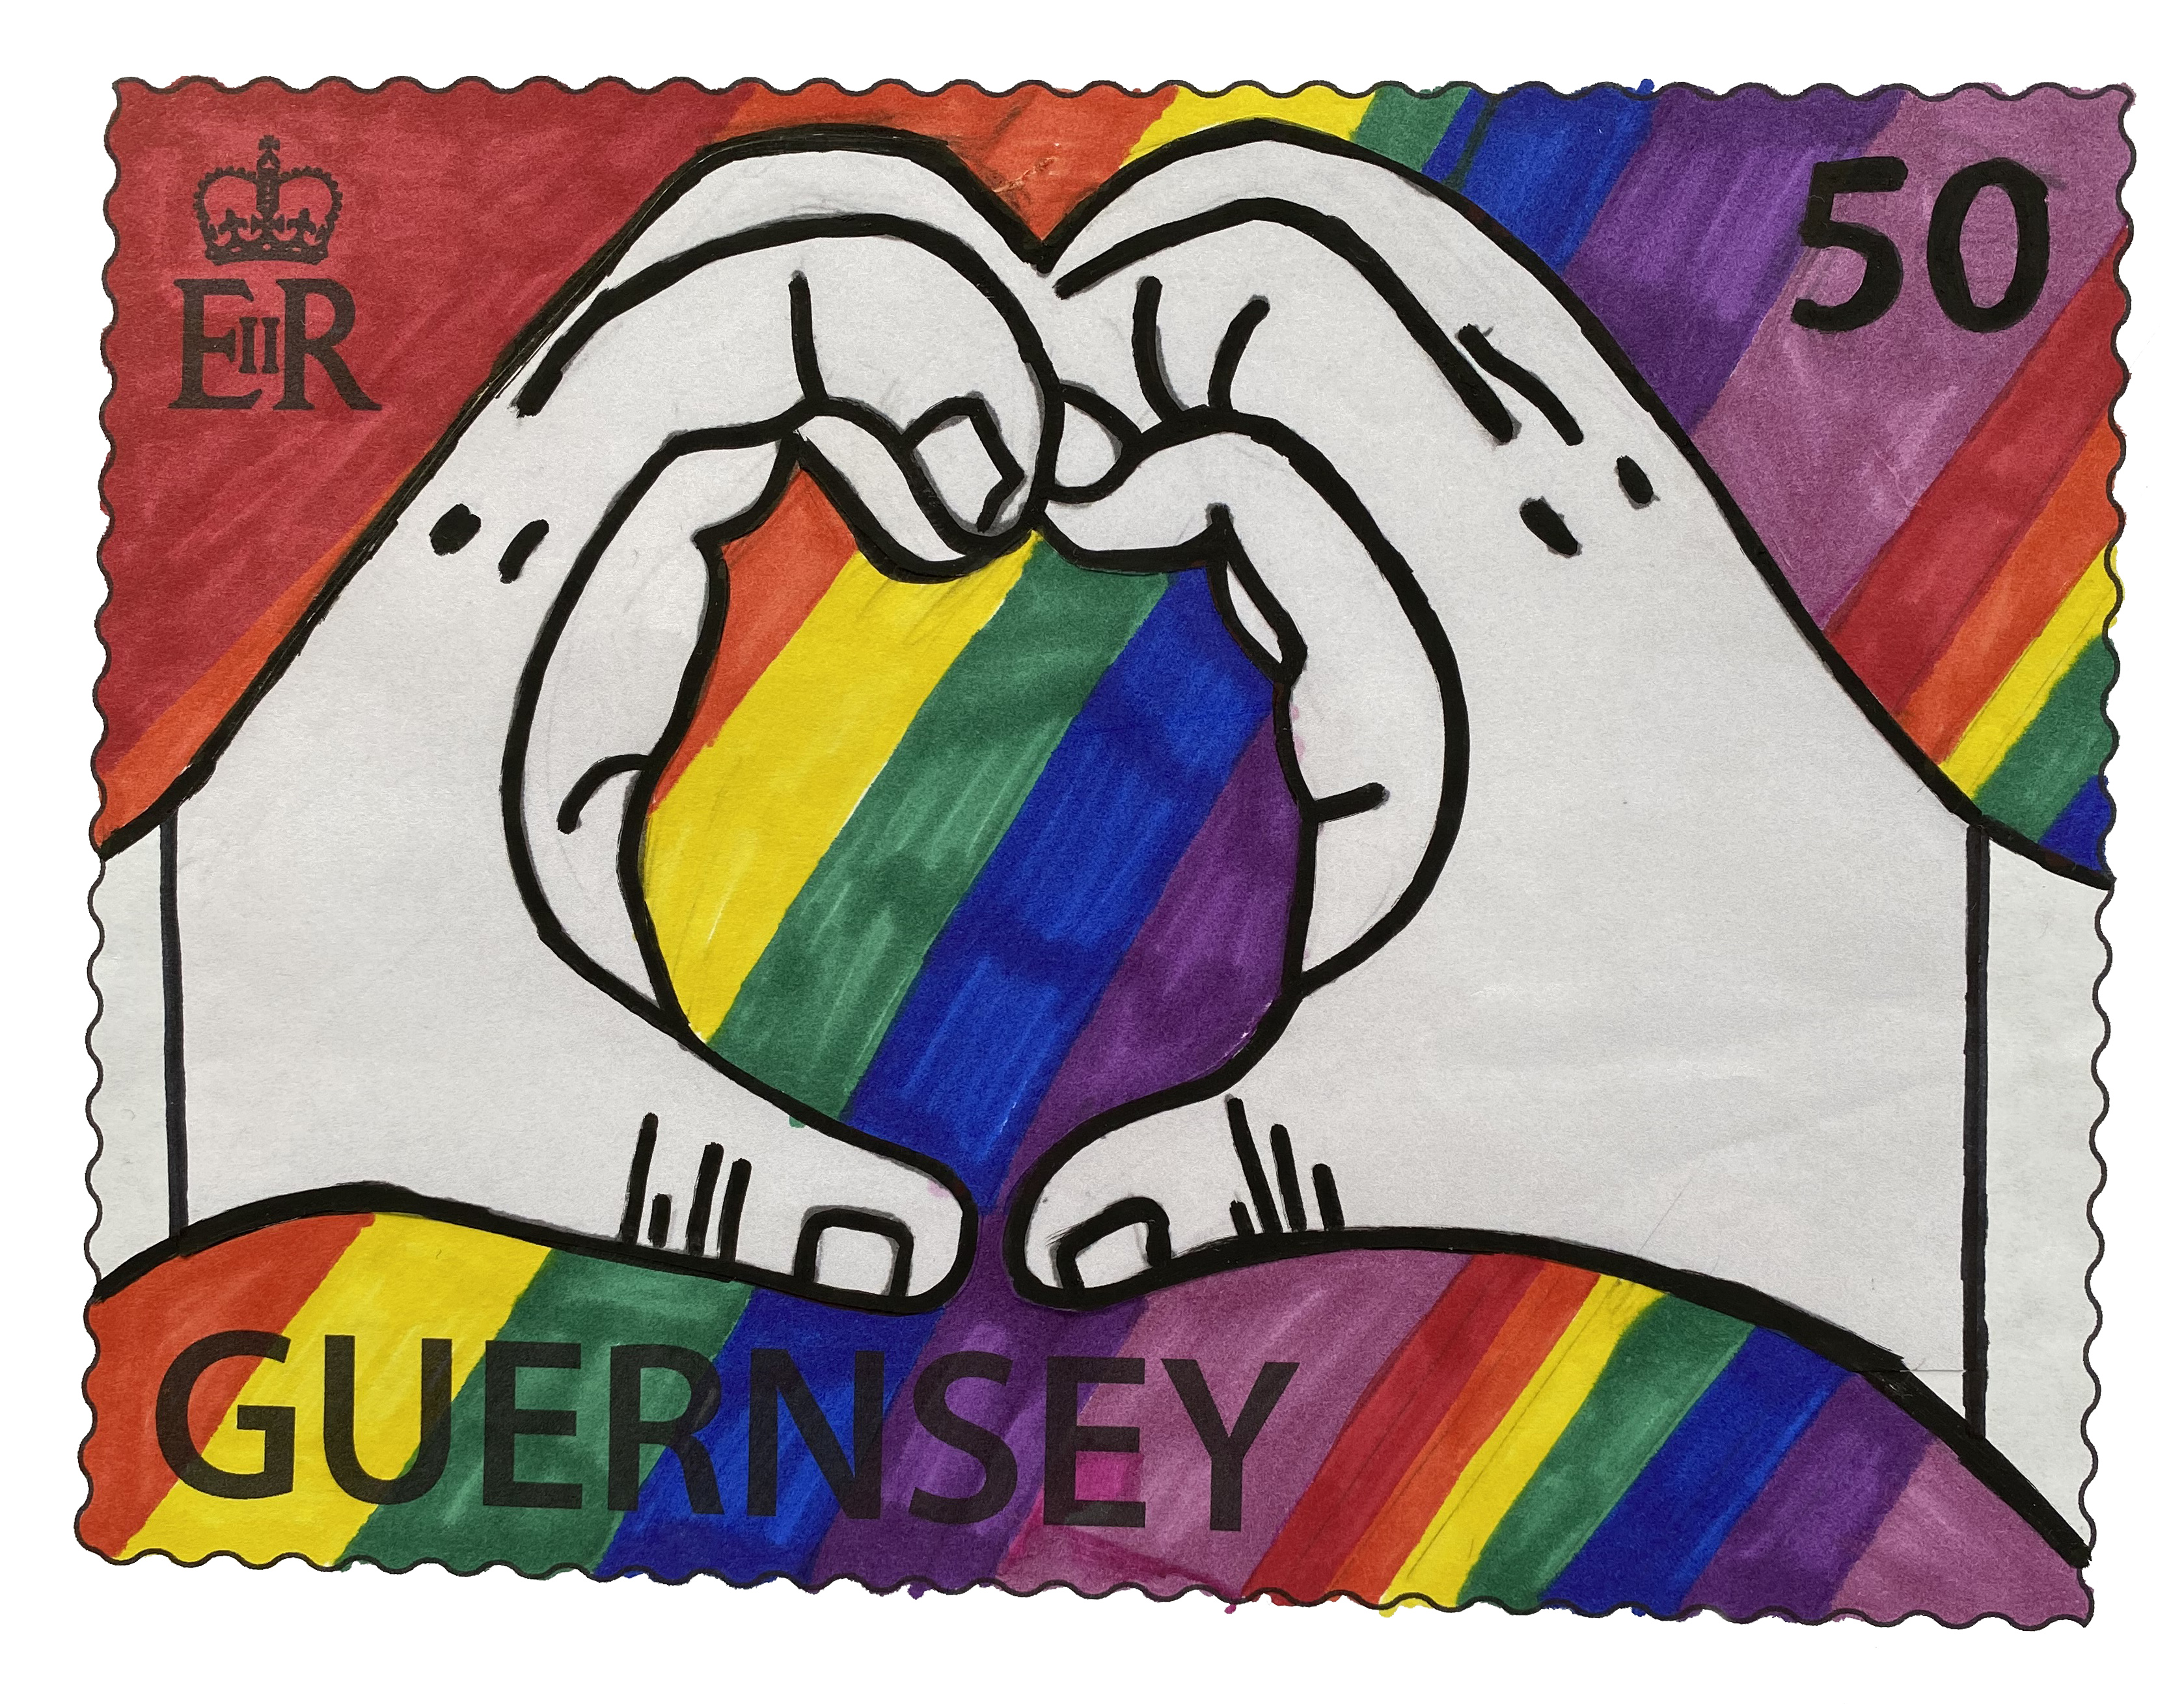 School children's designs chosen for GuernseyTogether stamp competition